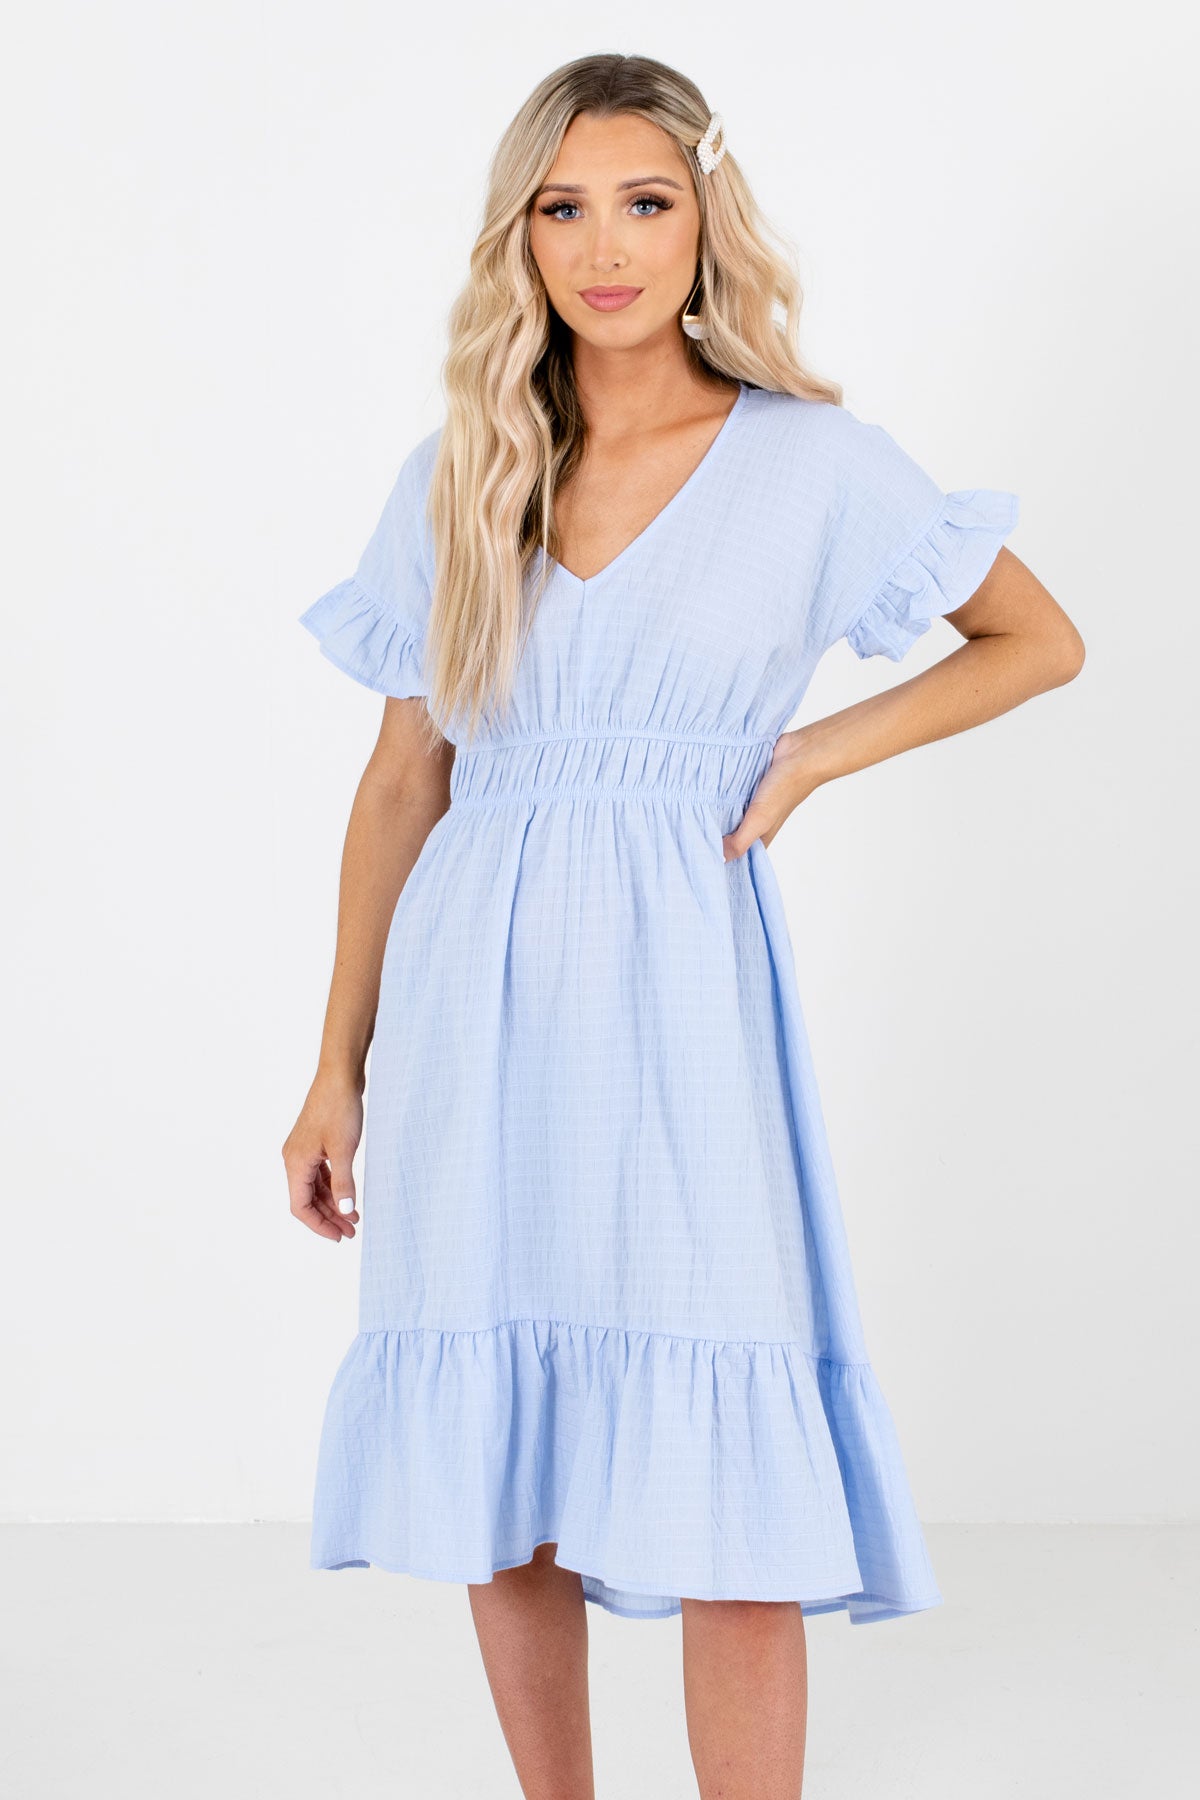 It's Fate Blue Knee-Length Dress | Boutique Dresses for